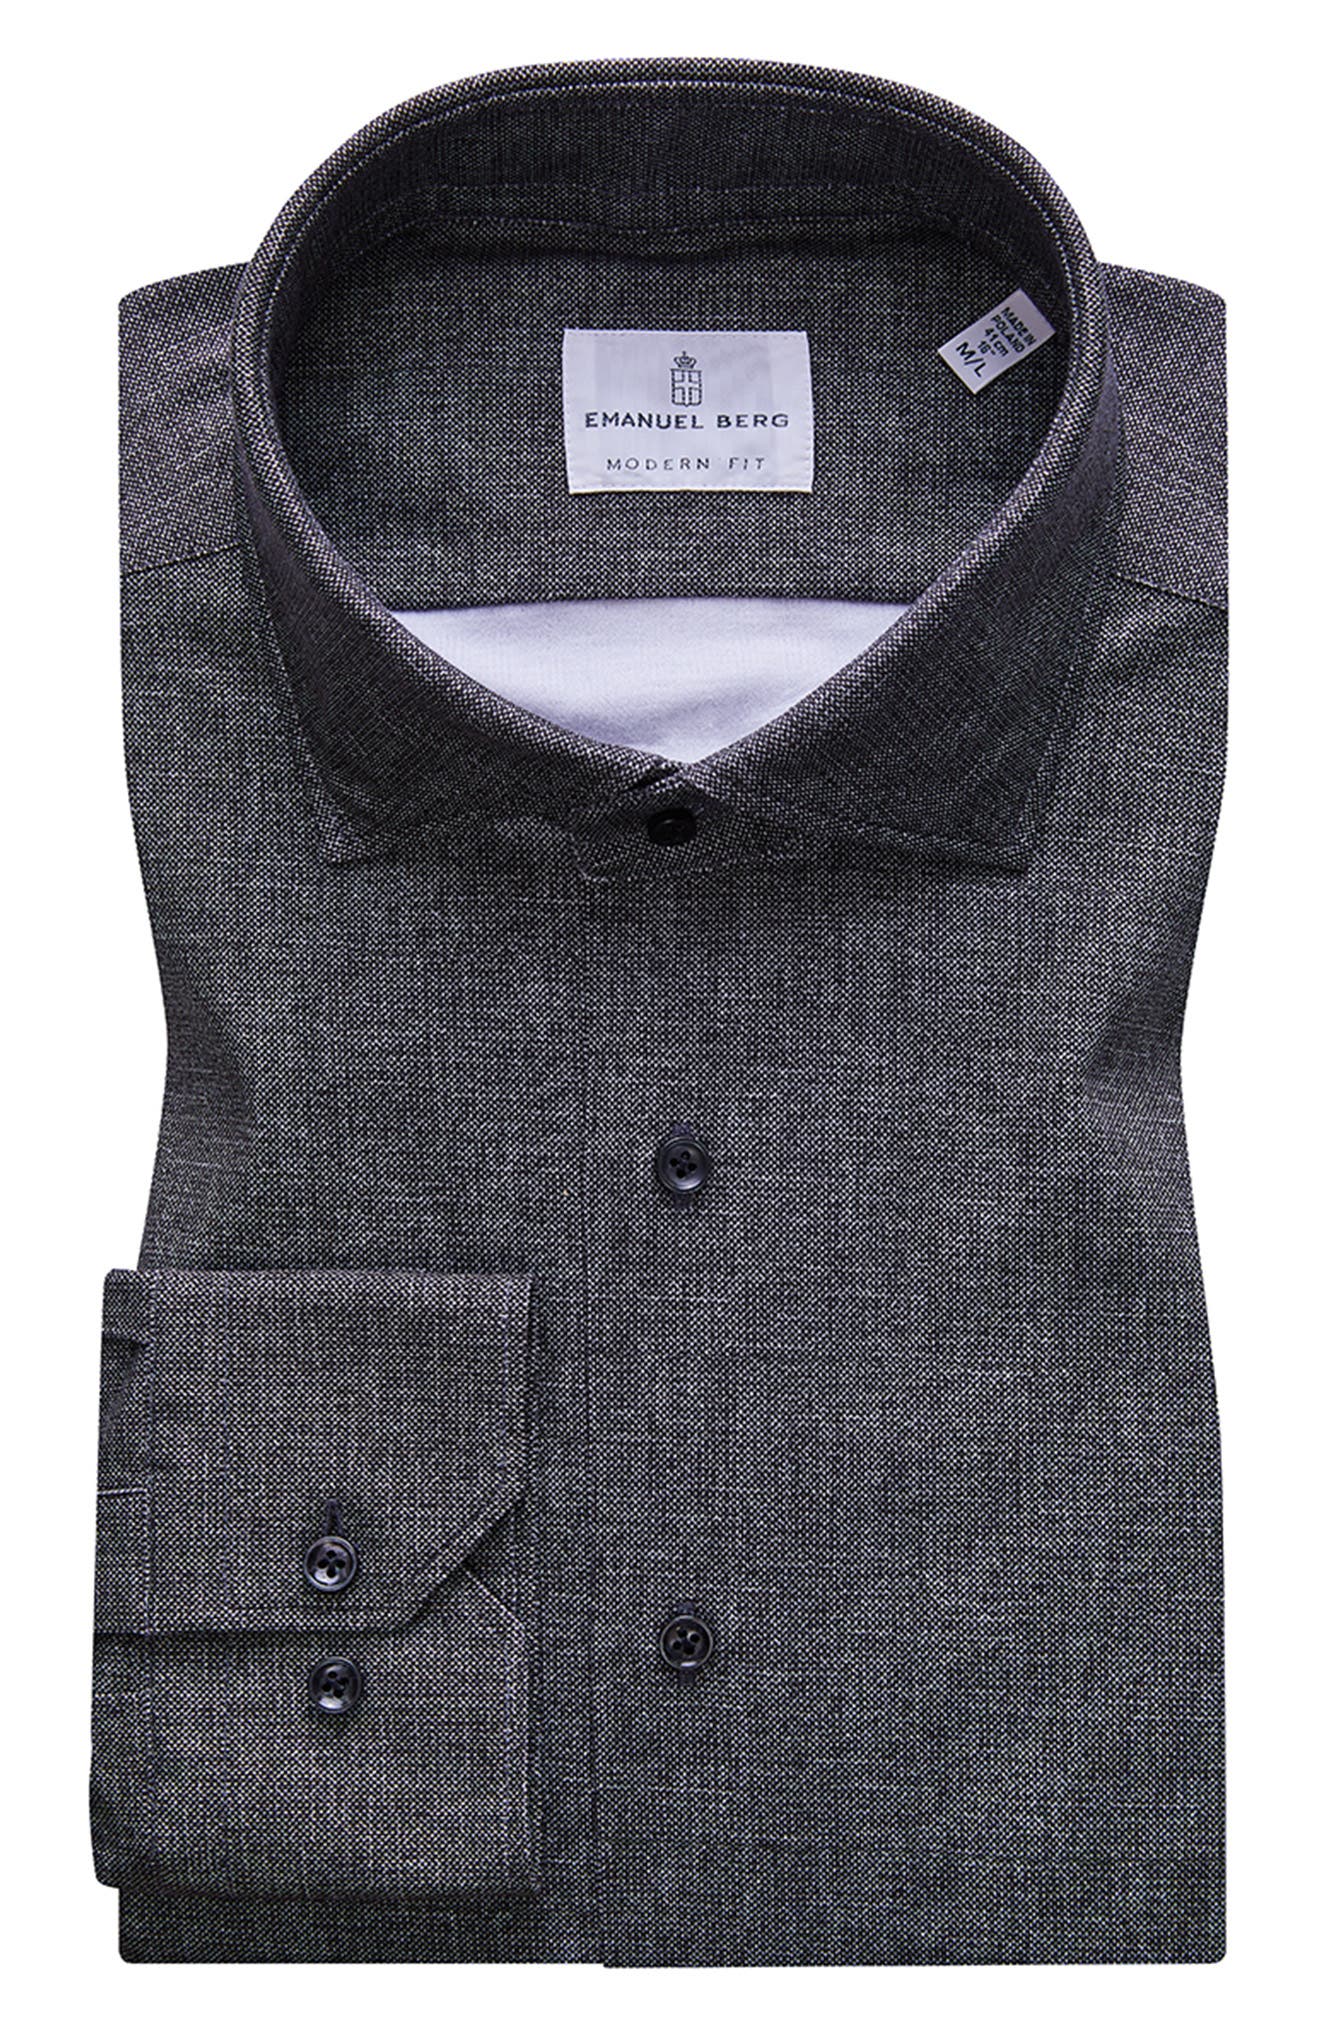 Emanuel Berg 4Flex Knit Modern Fit Long Sleeve Button-Up Shirt in Black at Nordstrom